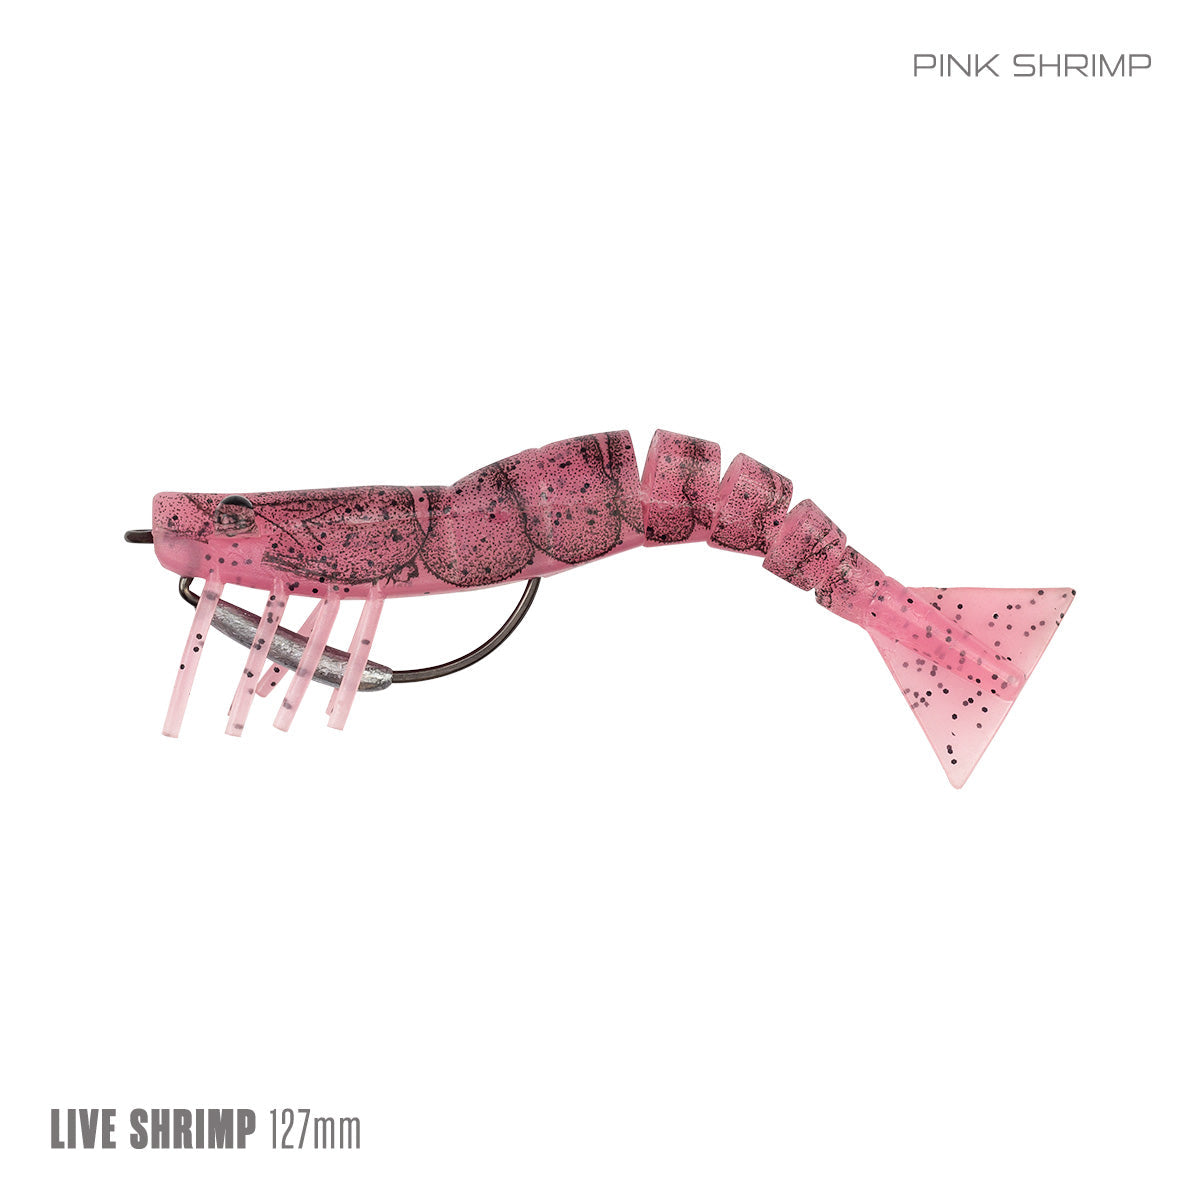 Live Shrimp 127mm